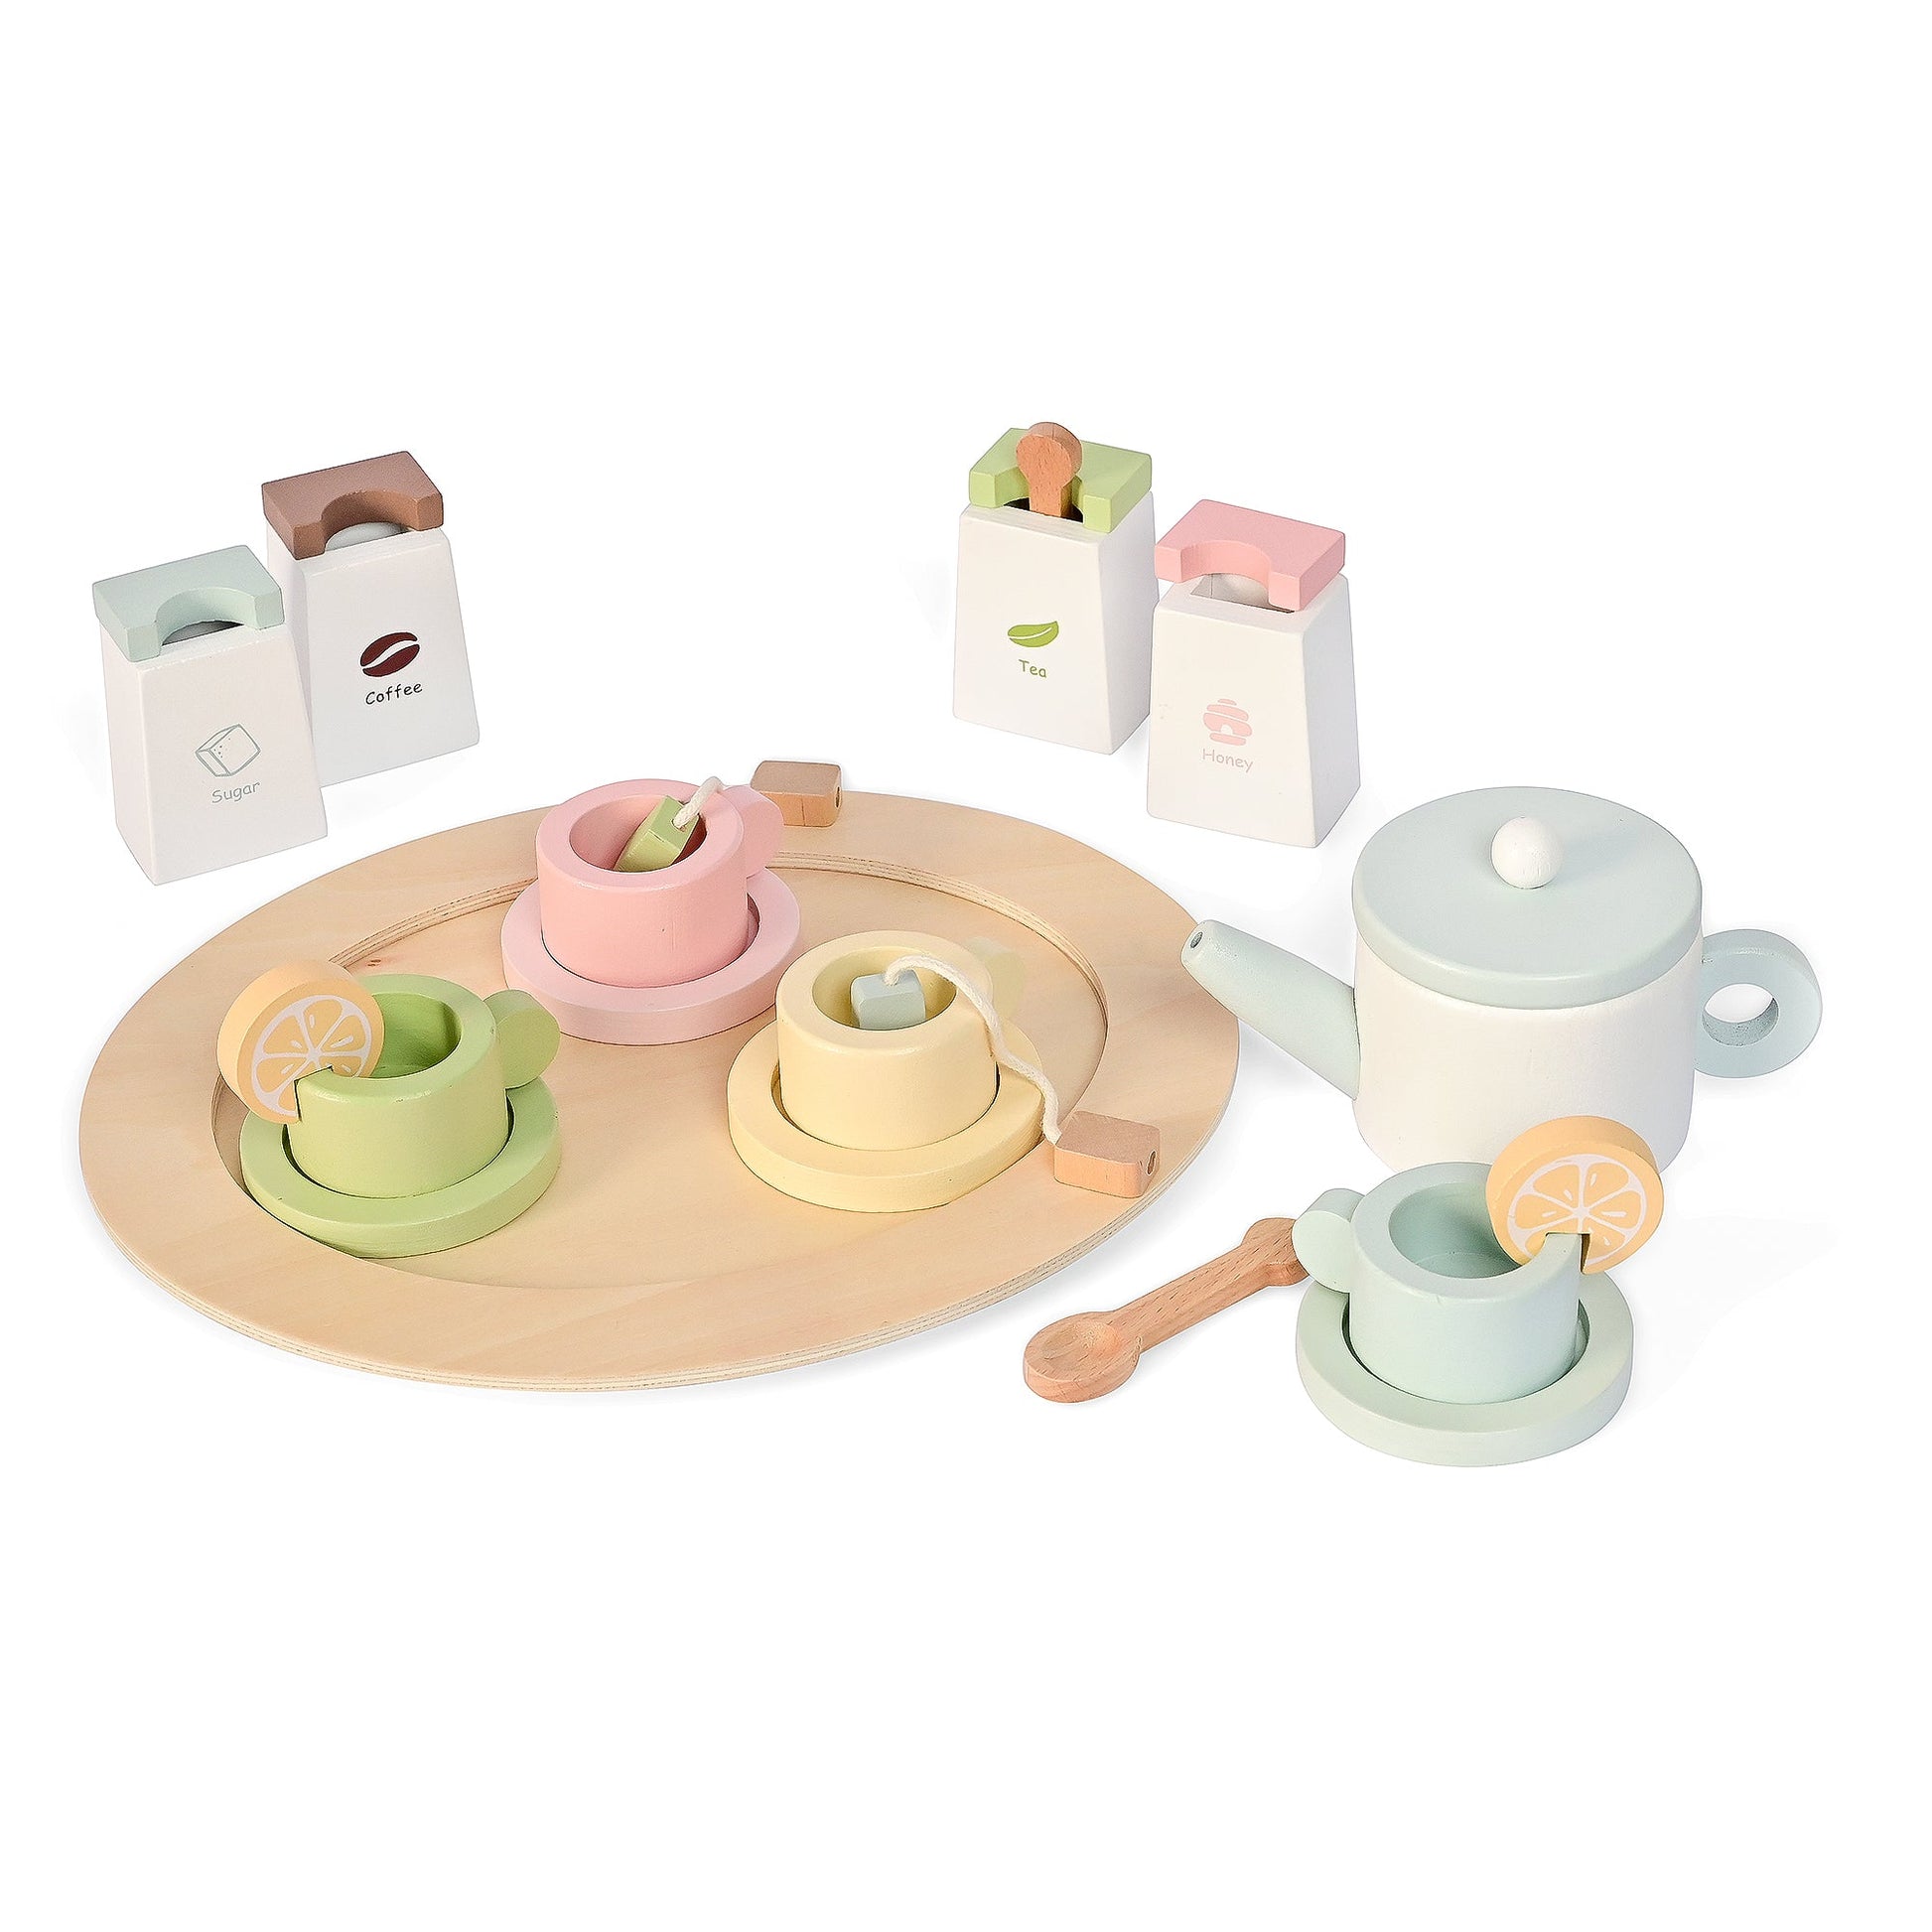 Buy Wooden Tea PlaySet for kids - SkilloToys.com